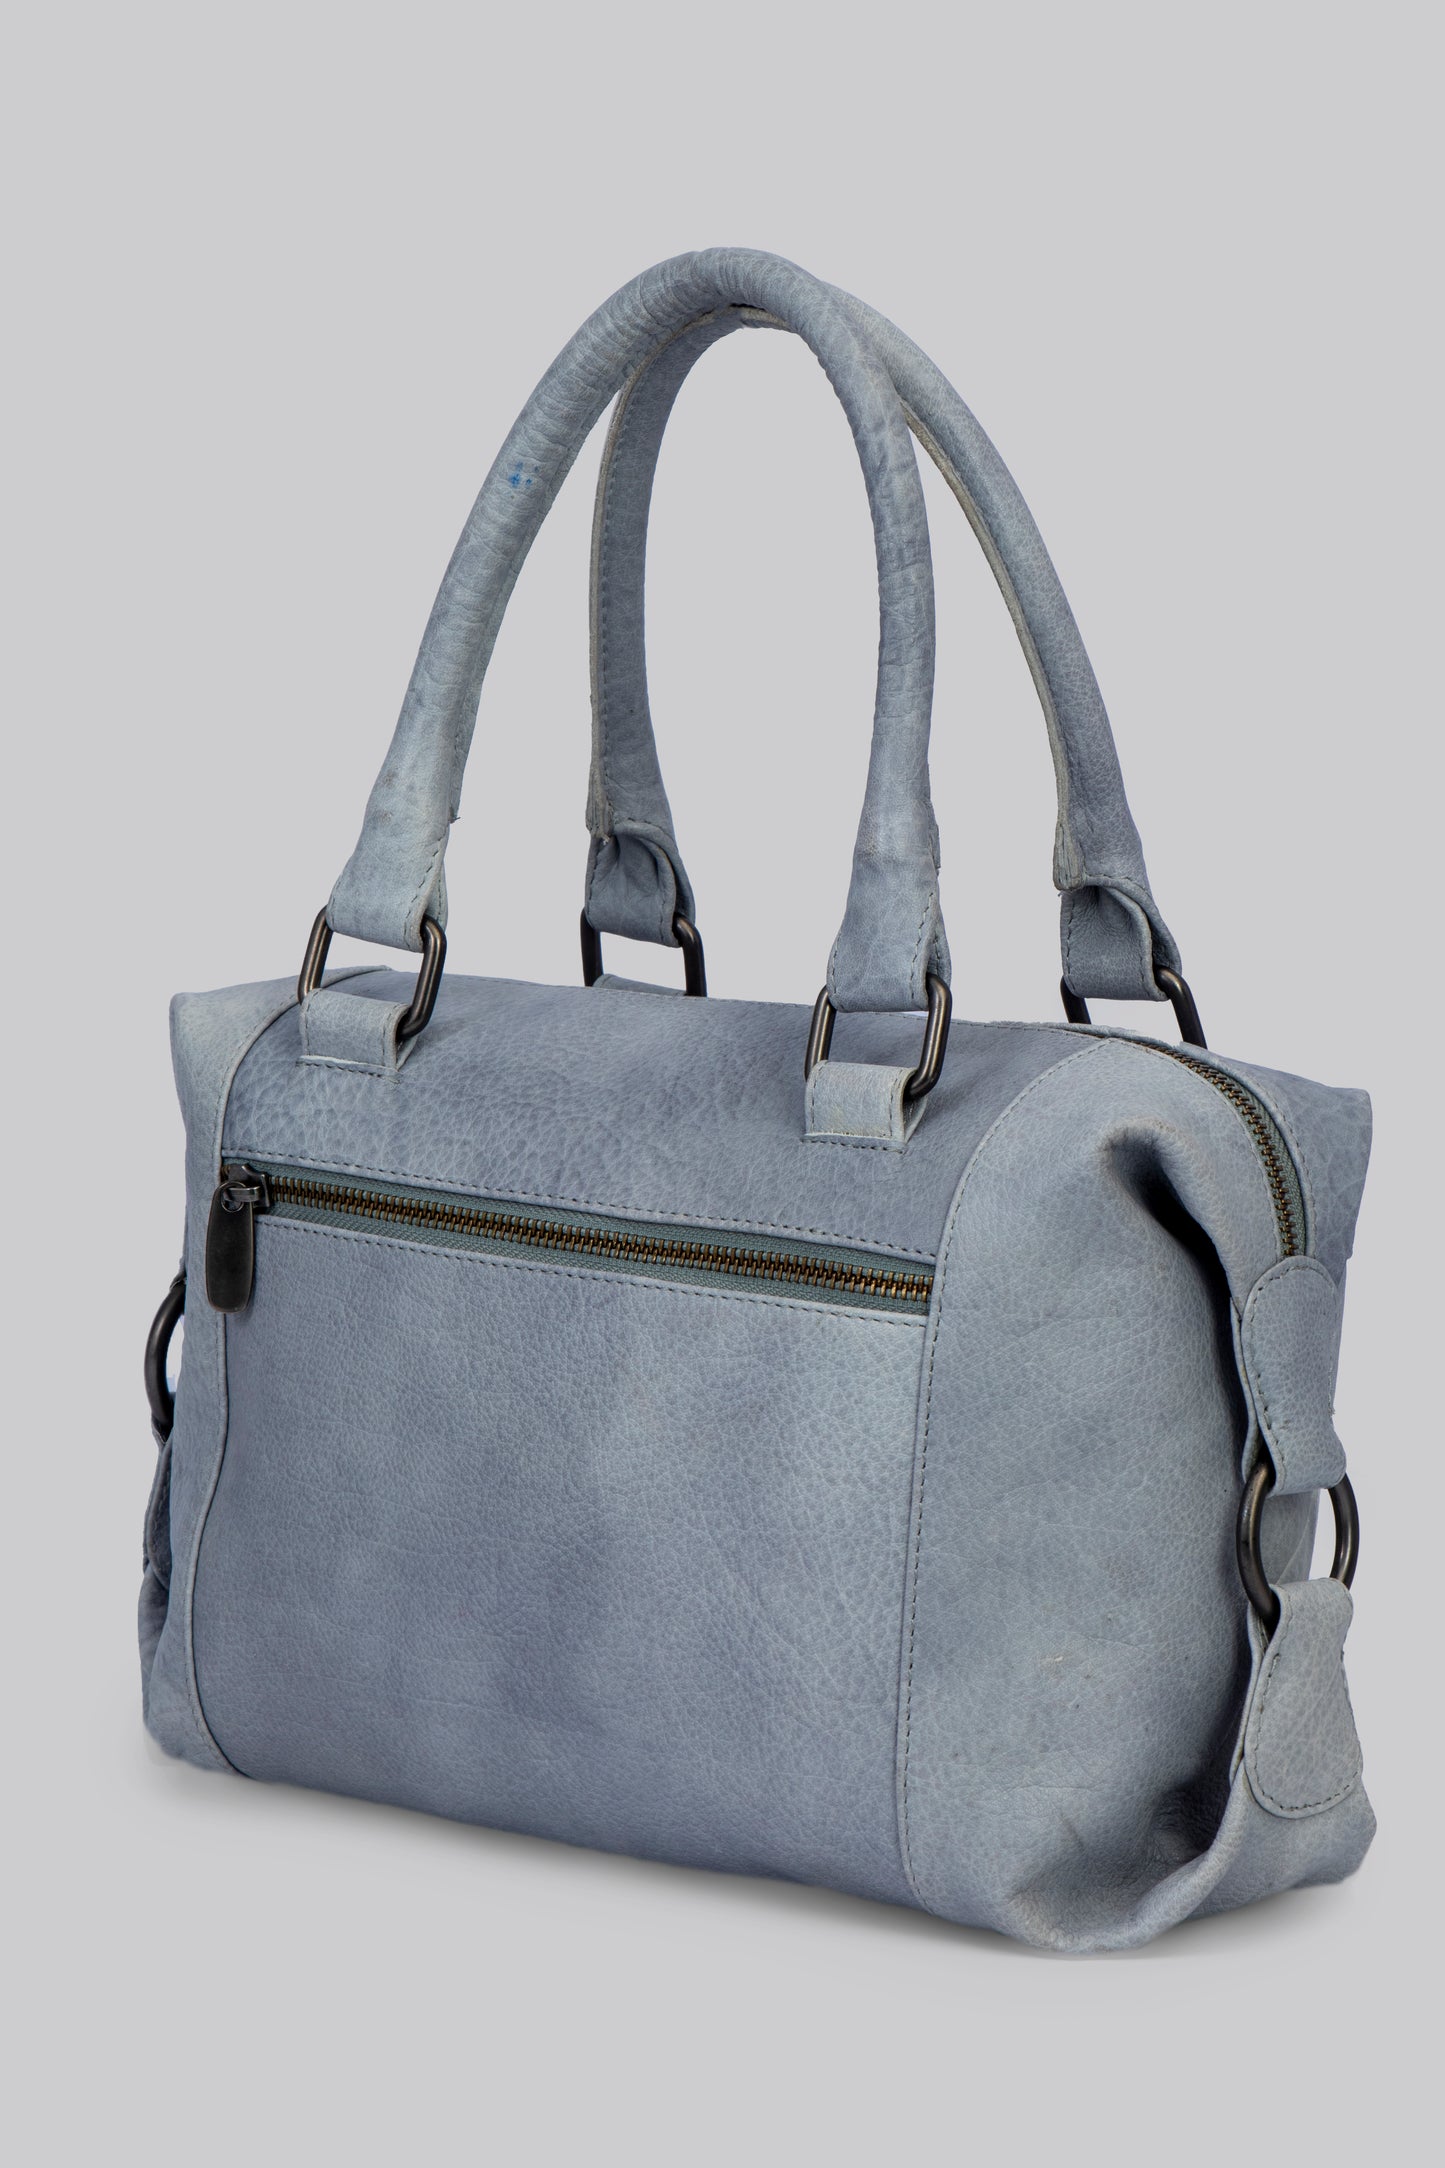 Ladies Handbag in Sky Blue Colour